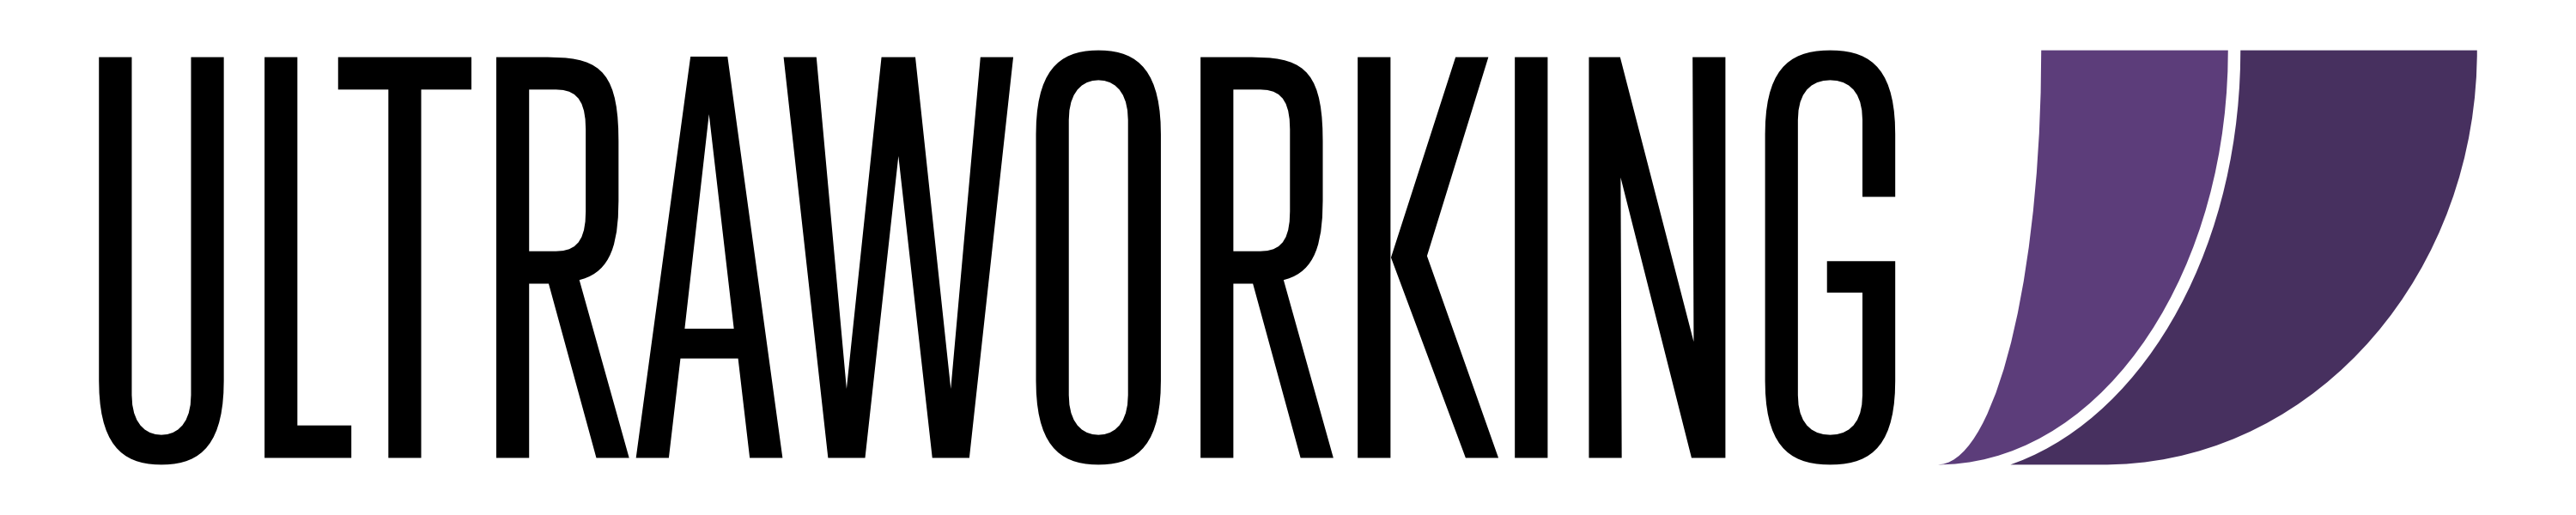 Ultraworking Logo